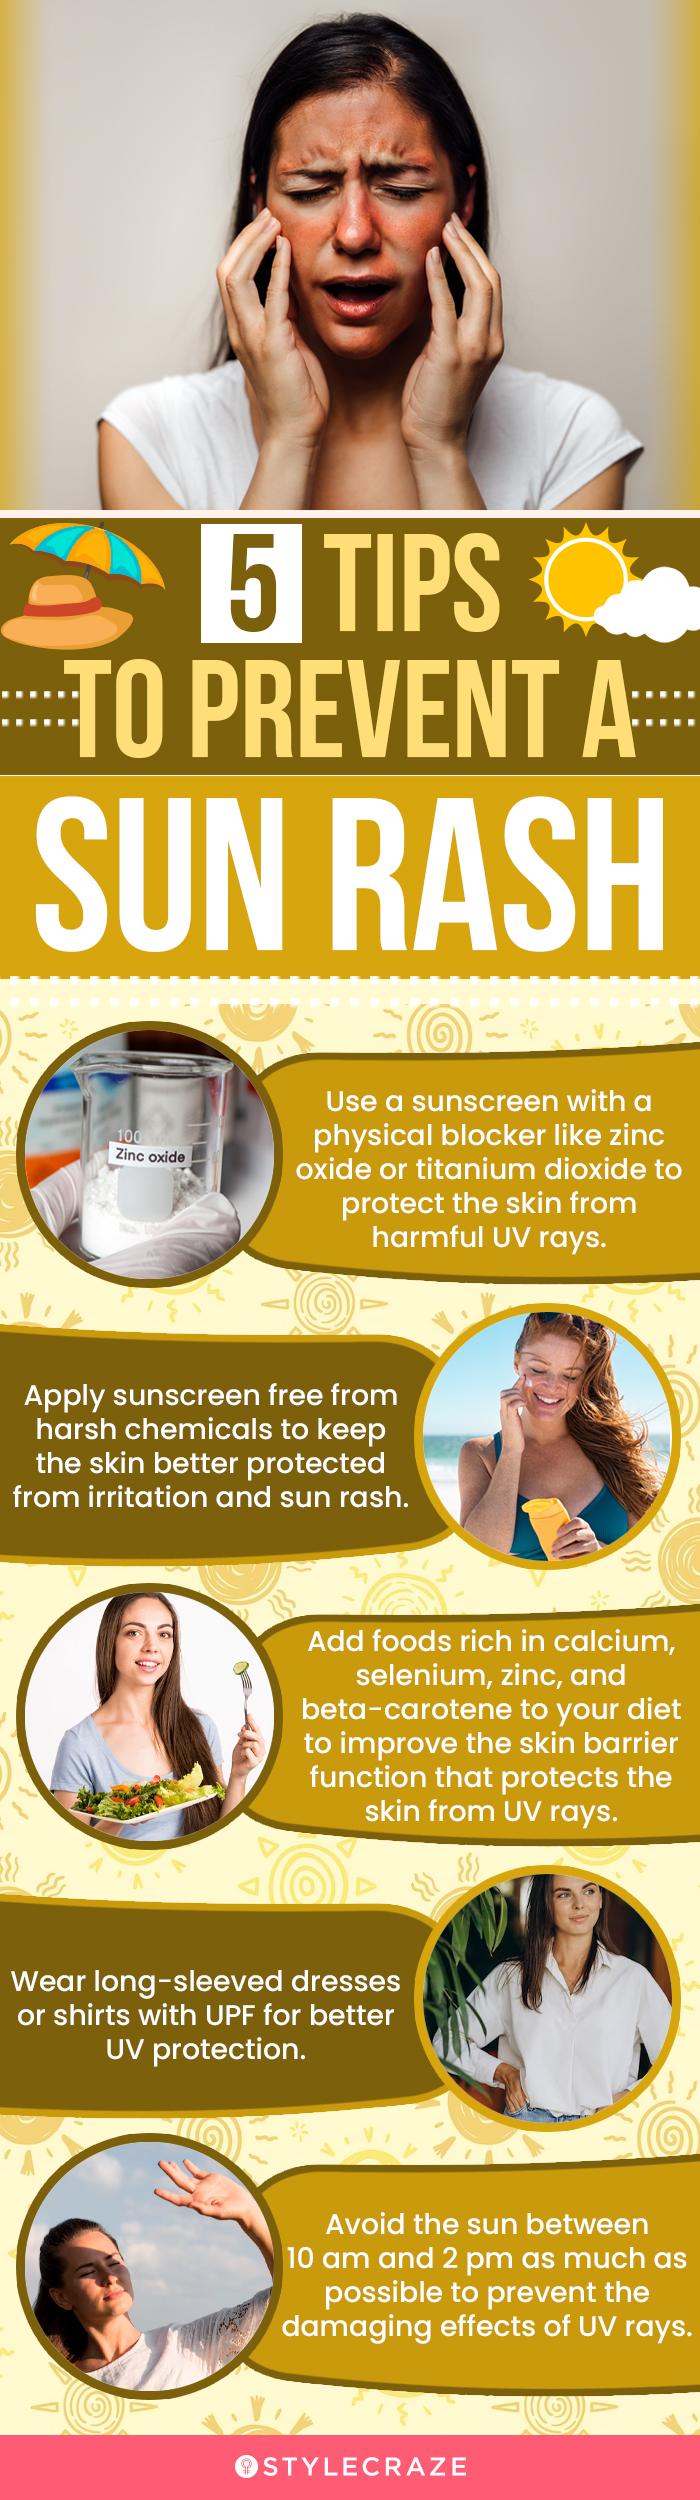  5 tips to prevent sun rash (infographic)